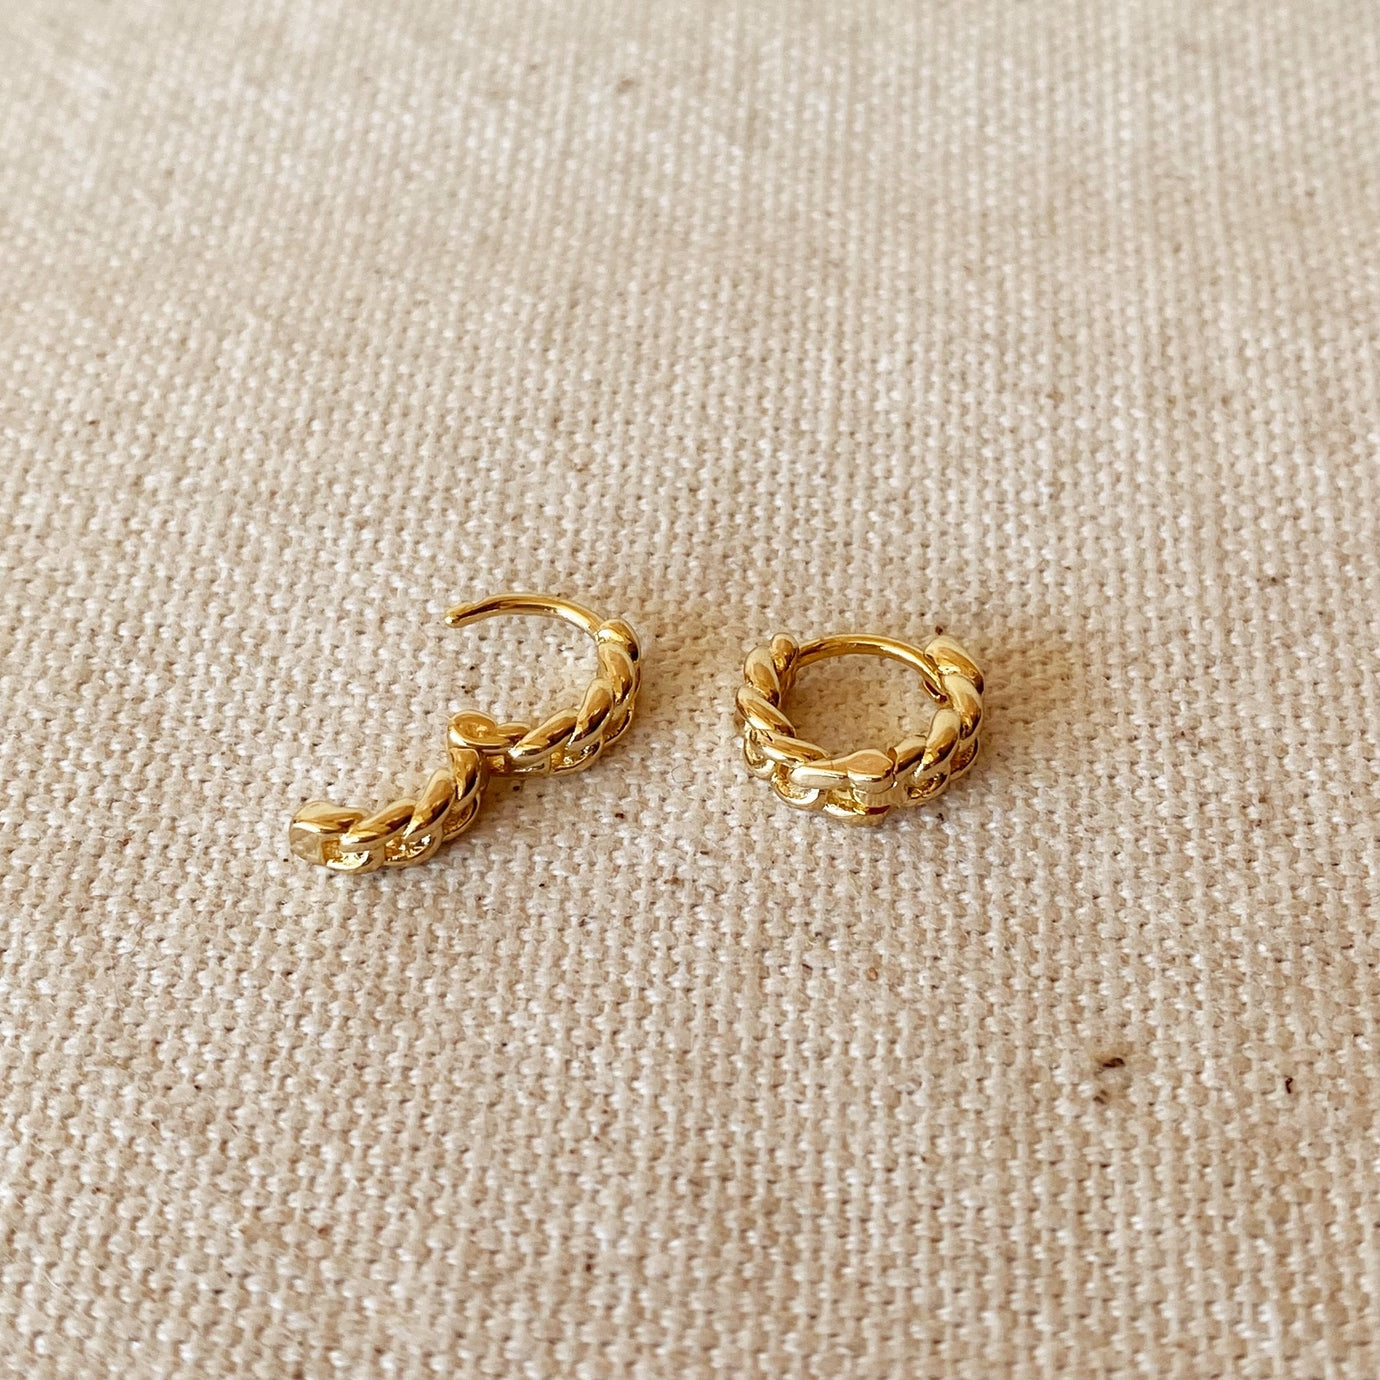 Cuban Chain Clicker Earring, 18k Gold Filled